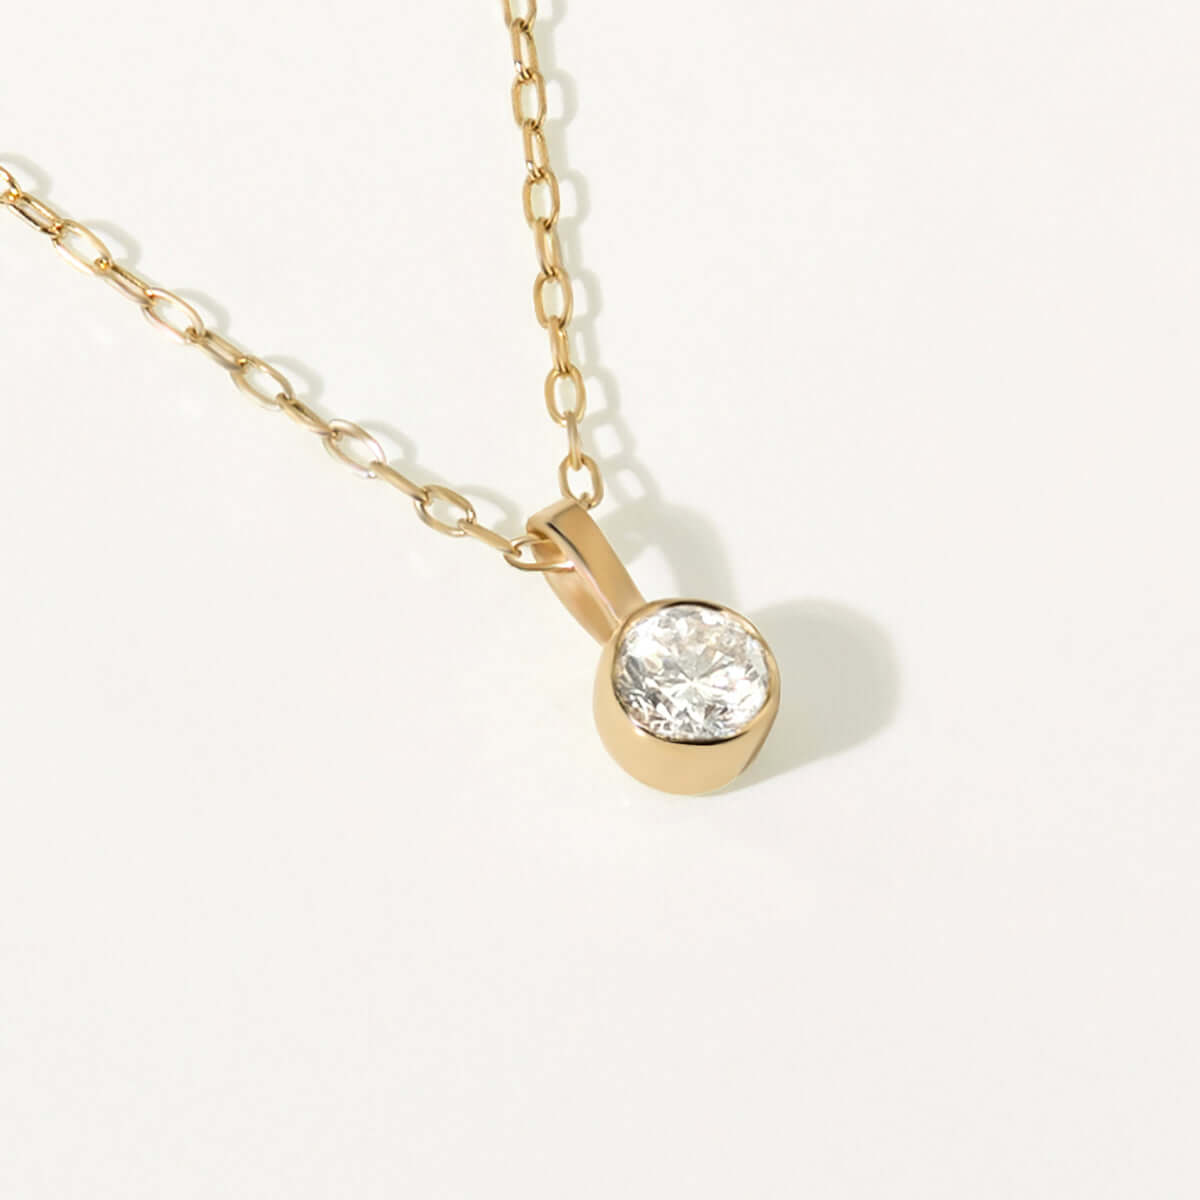 Bezel-Set Solitaire Diamond Pendant Necklace in 14K Yellow Gold